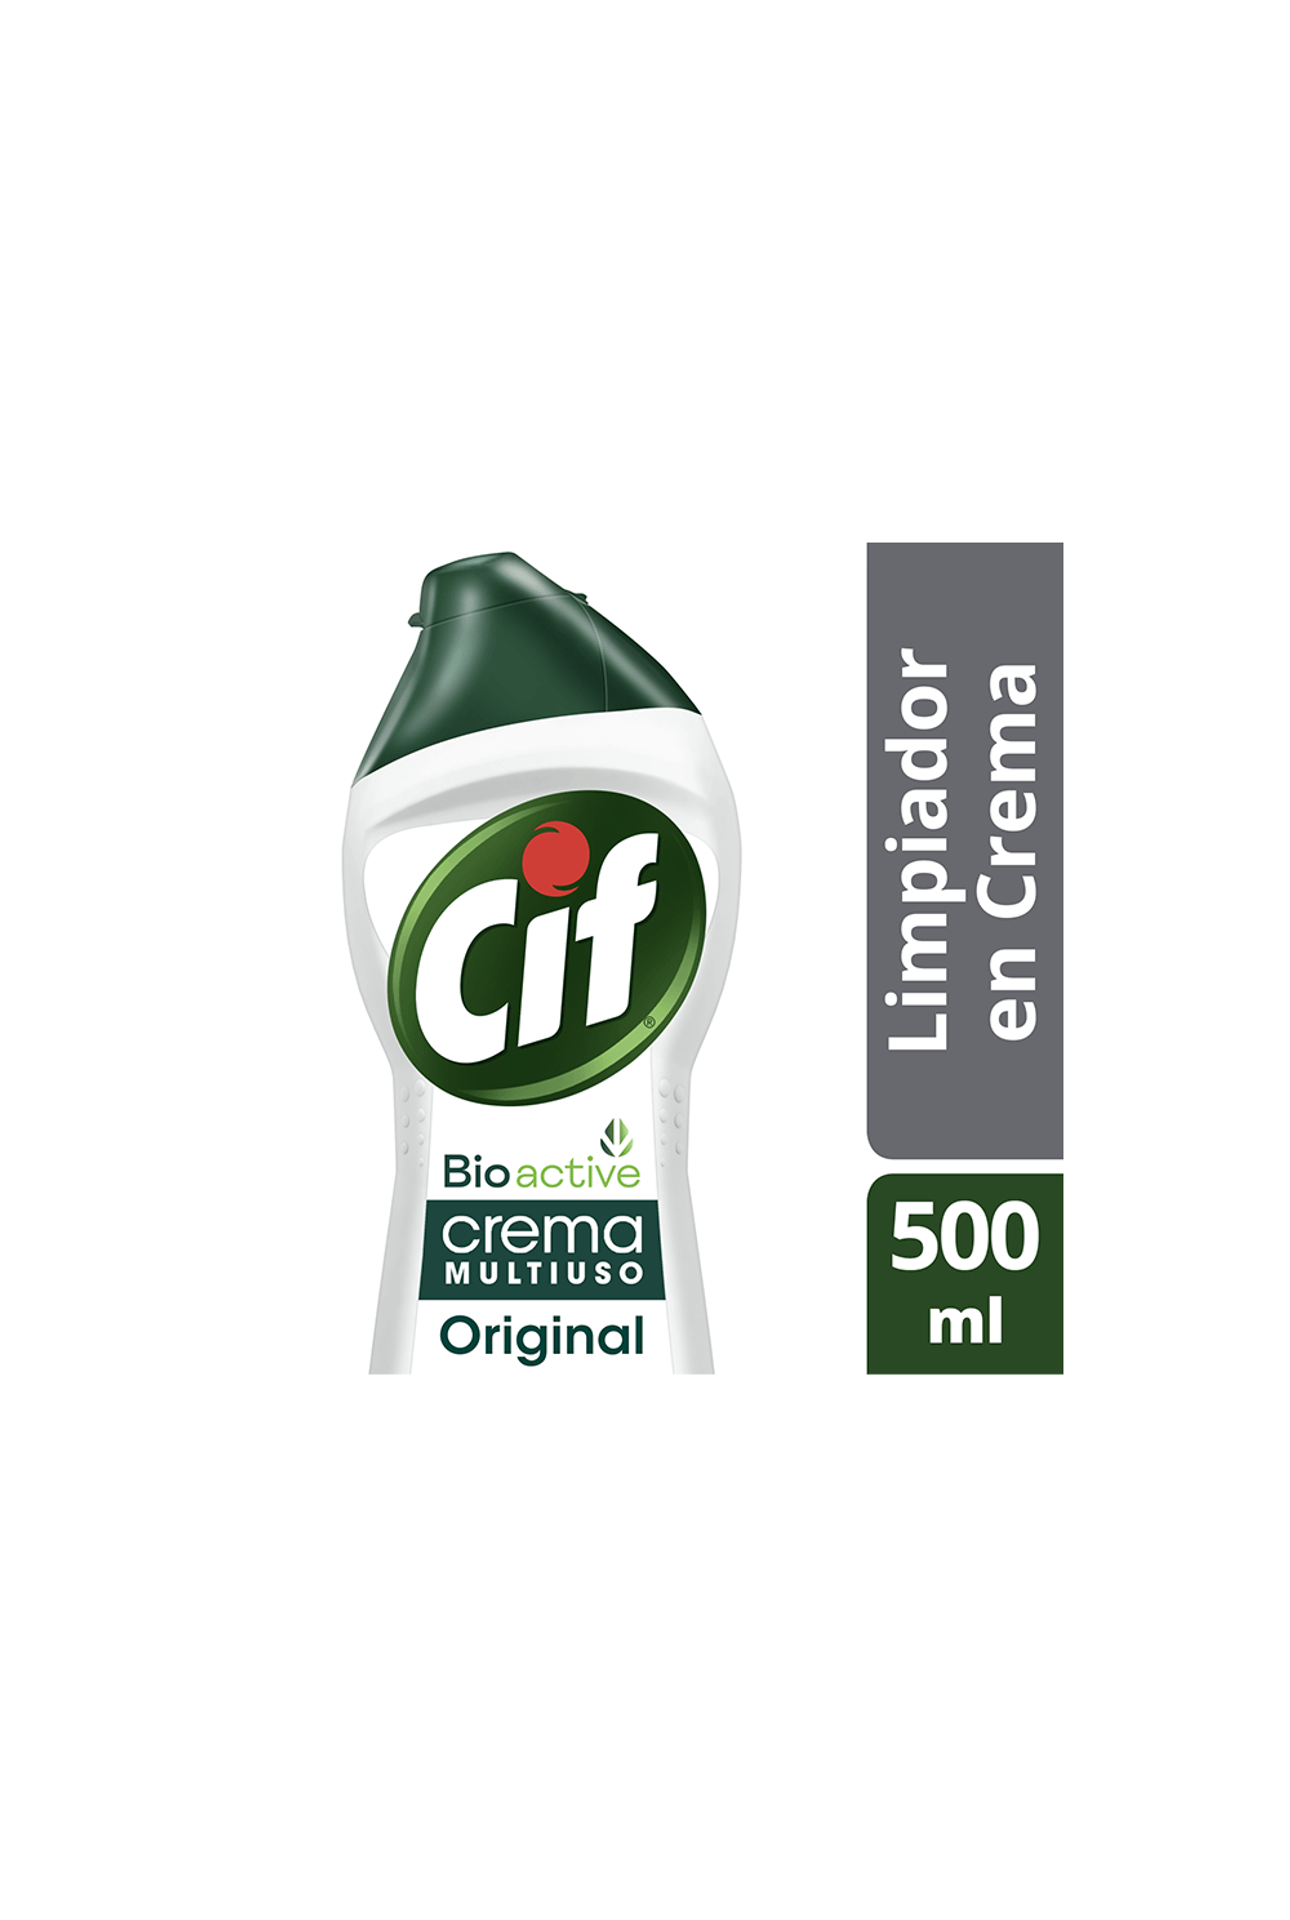 Cif Crema Original Microparticulas